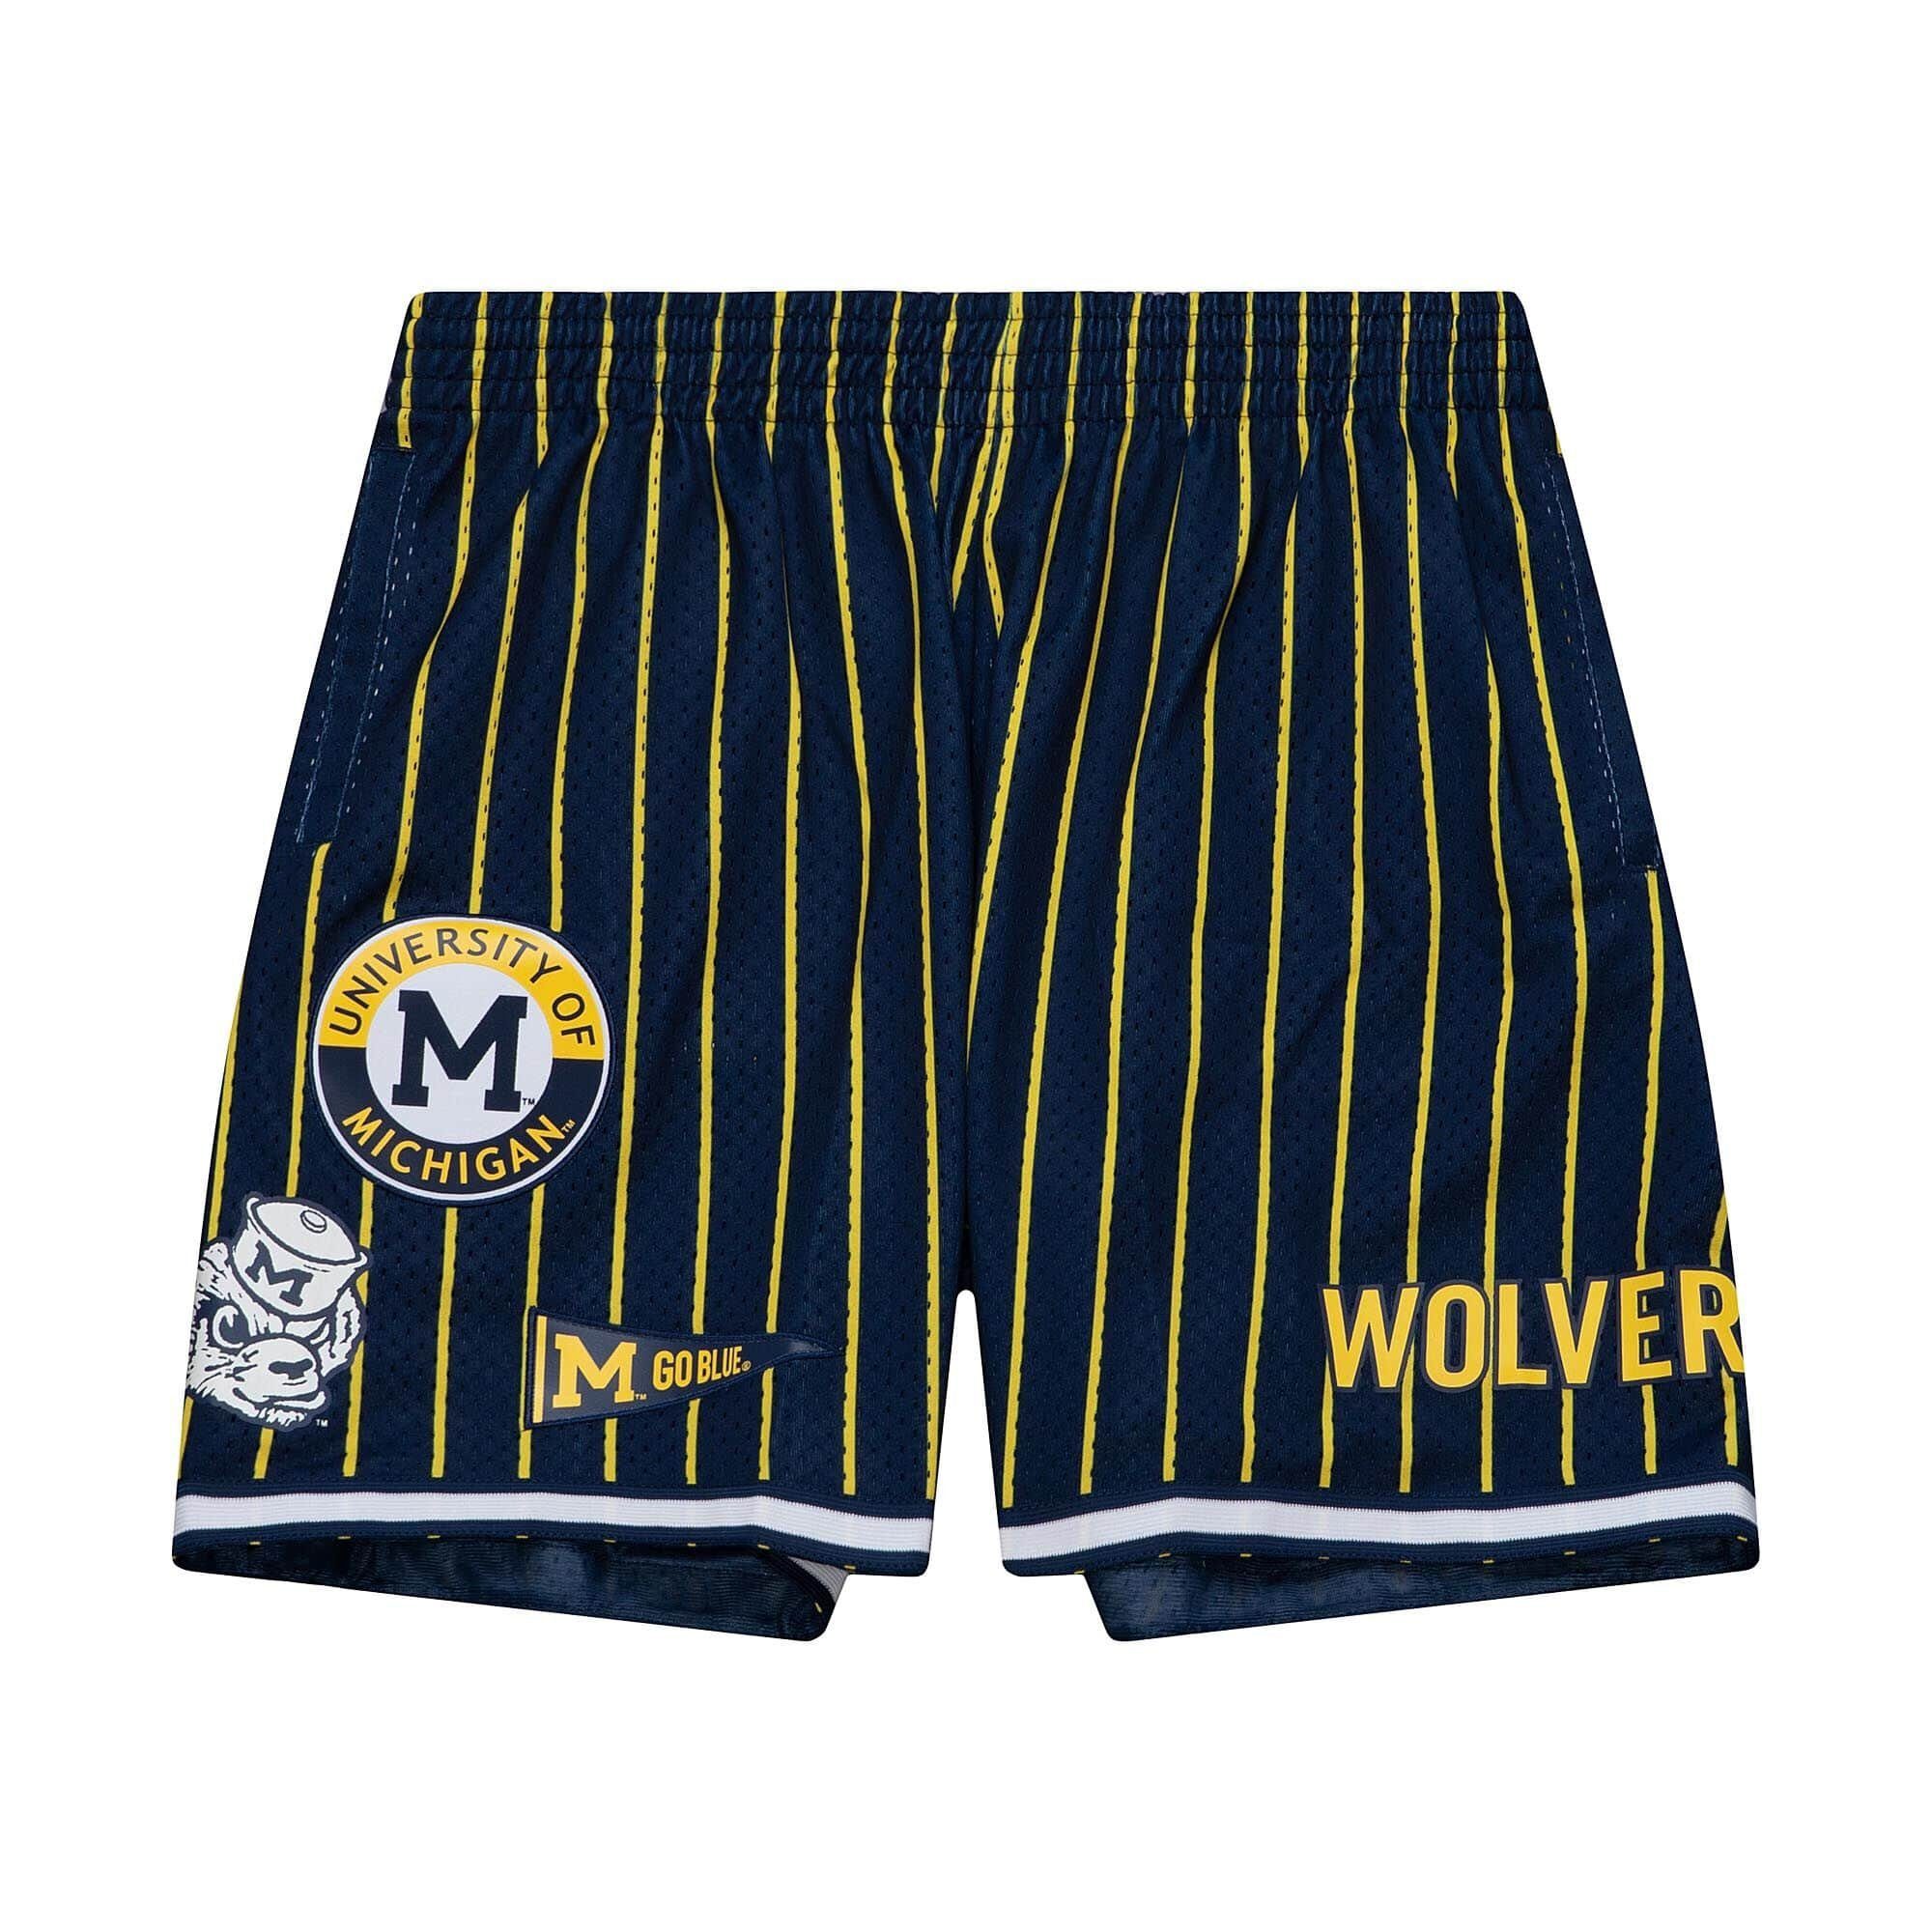 Michigan Shorts Of Mitchell University Ness Hometown &